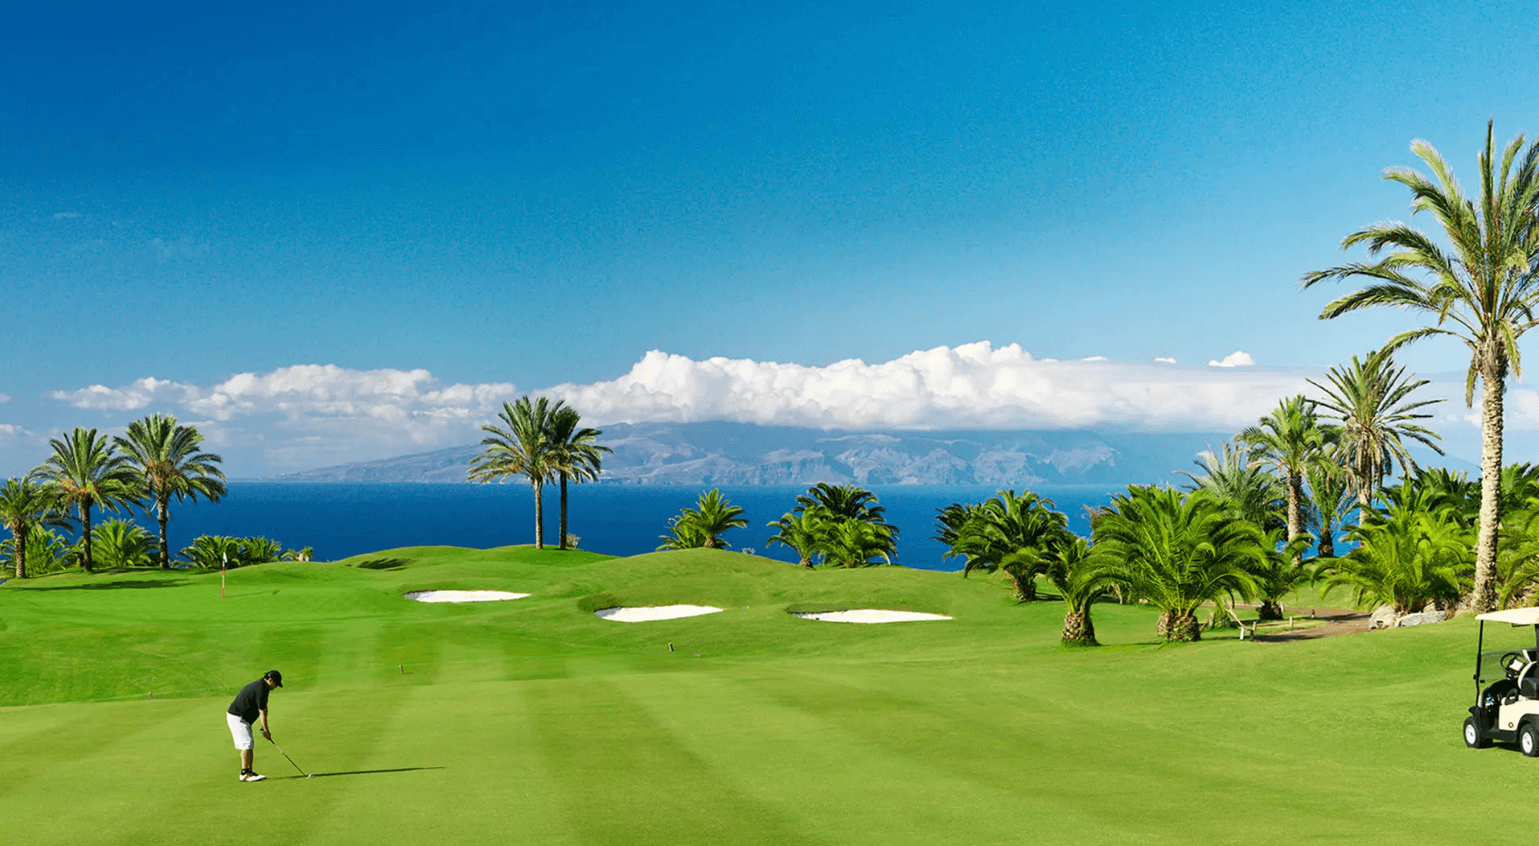 Spain's Golfing Paradise